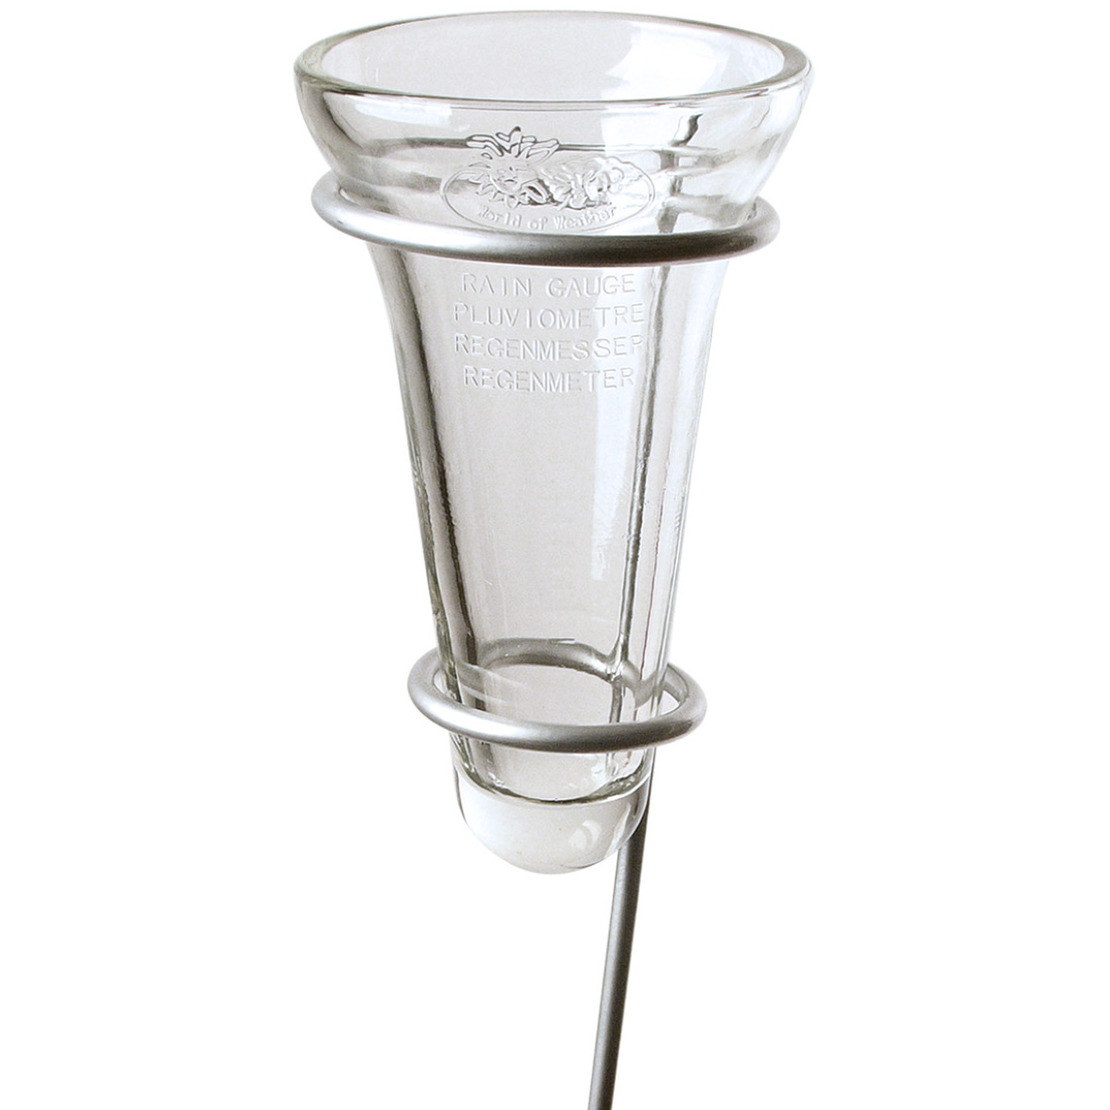 1x Regenmeter-neerslagmeter glas met verzinkte grondpen 69 cm